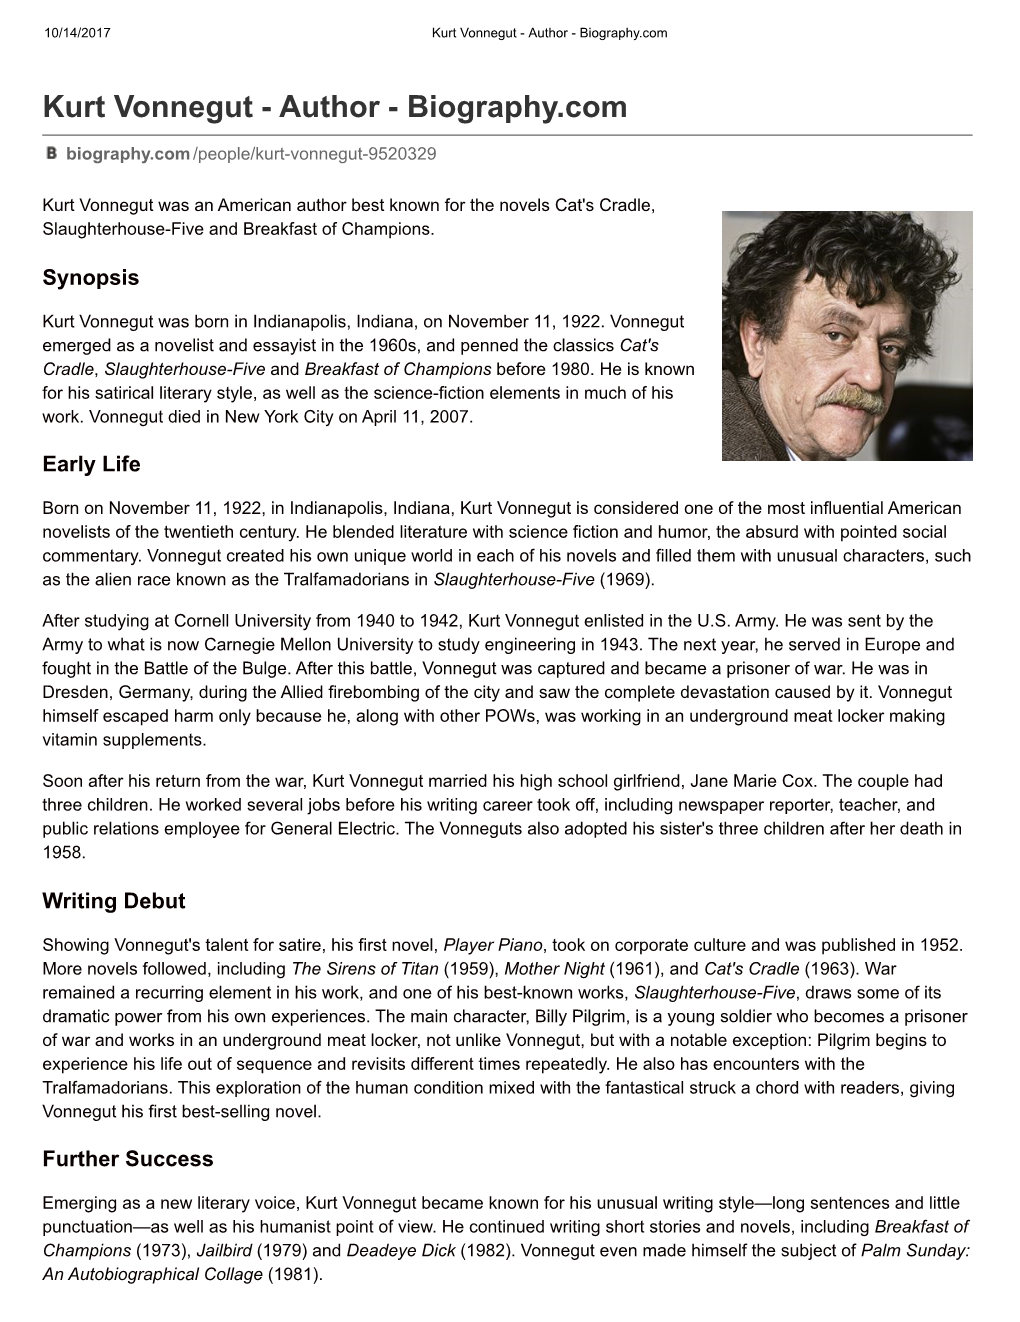 Kurt Vonnegut - Author - Biography.Com